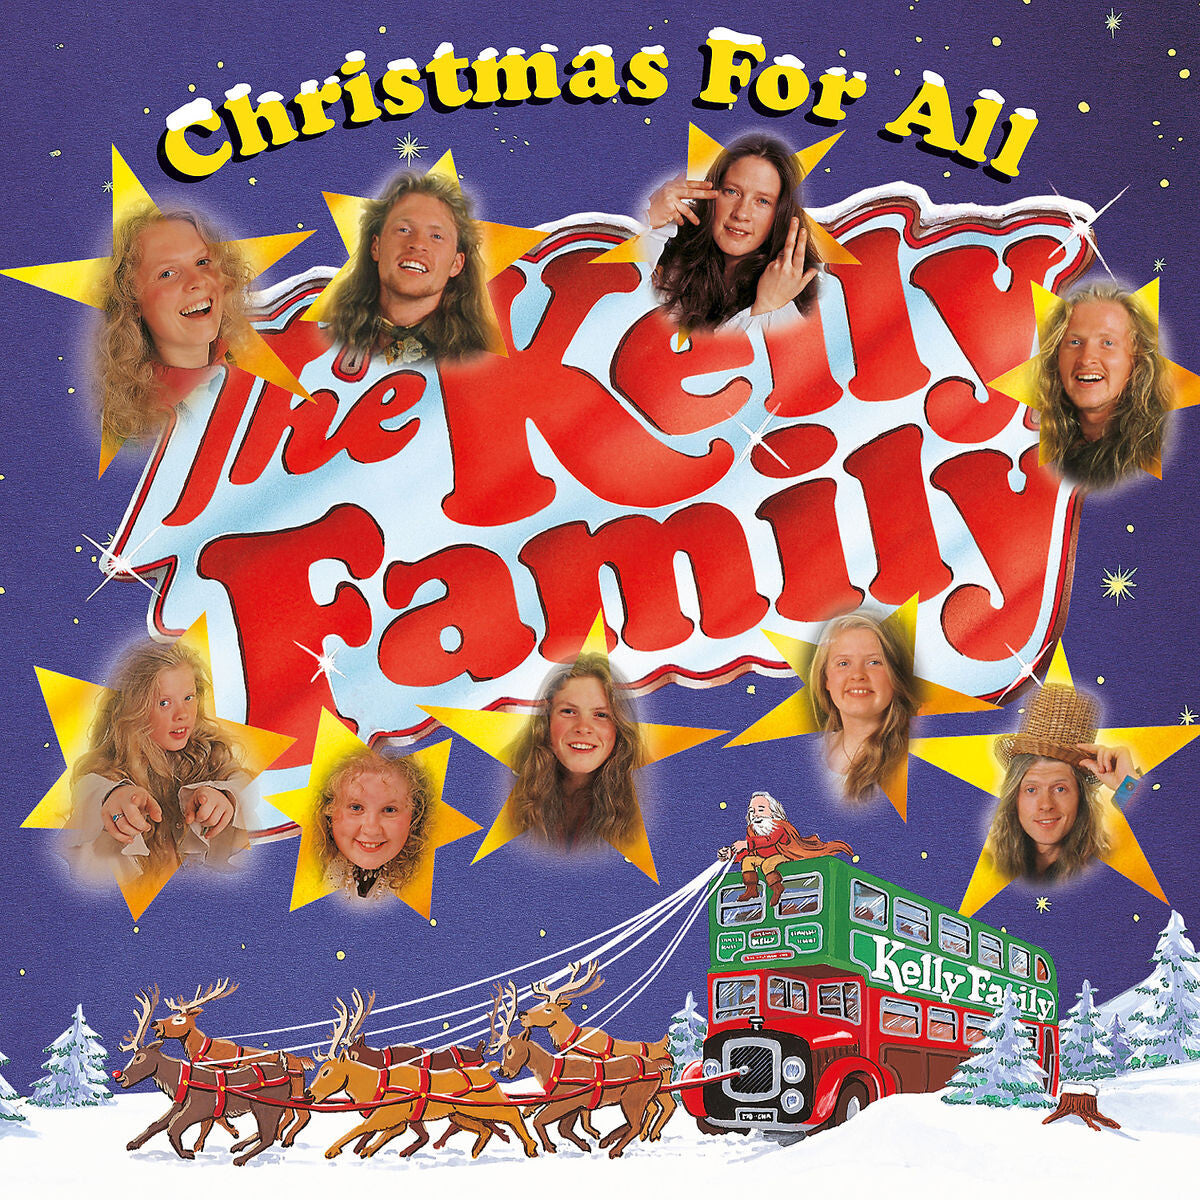 https://images.bravado.de/prod/product-assets/product-asset-data/kelly-family-the/kelly-family/products/139220/web/304034/image-thumb__304034__3000x3000_original/The-Kelly-Family-Christmas-For-All-CD-139220-304034.jpg